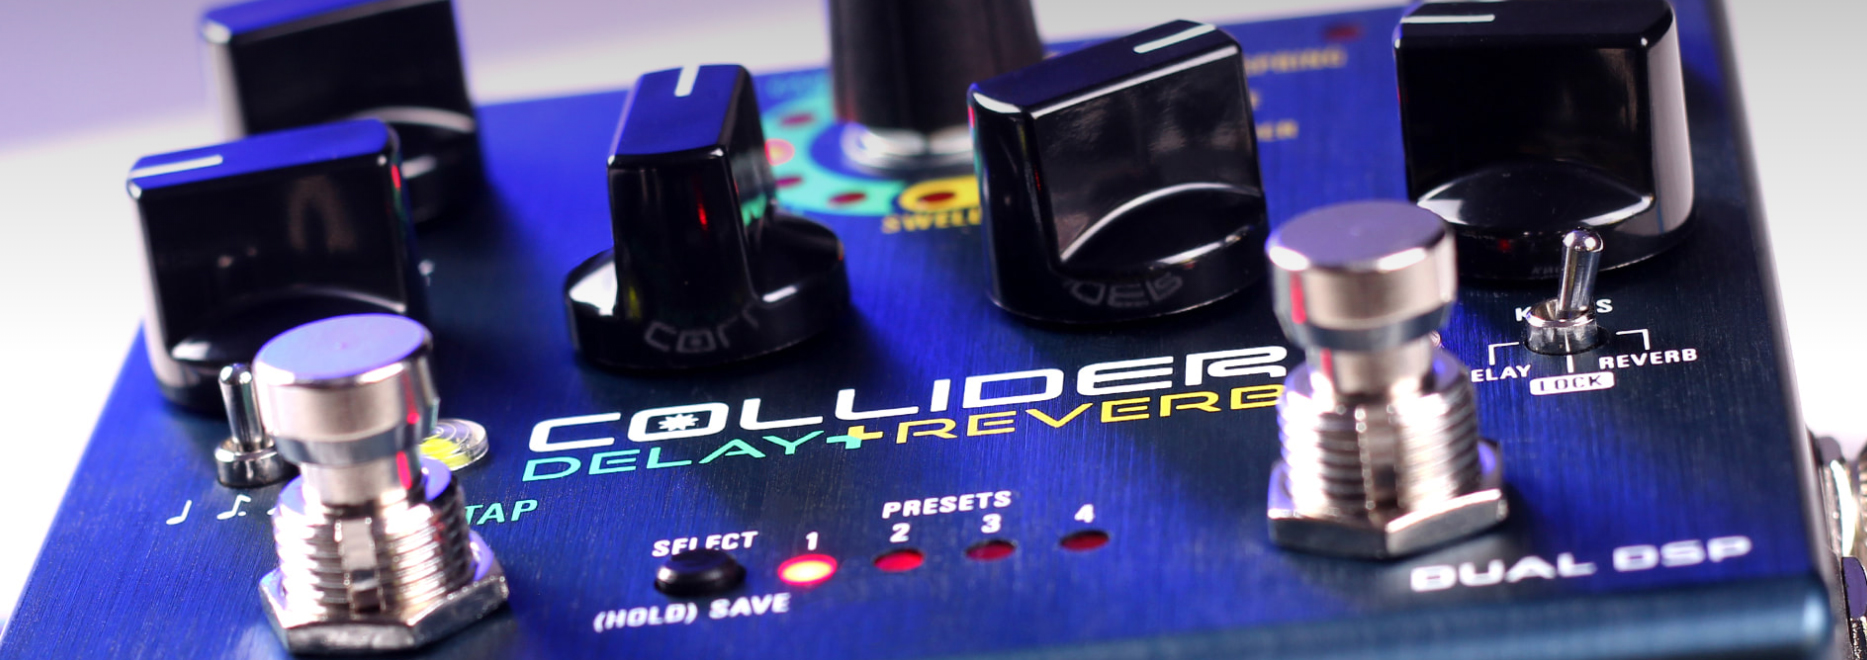 Source Audio Collider Delay+reverb - Reverb/Delay/Echo Effektpedal - Variation 2